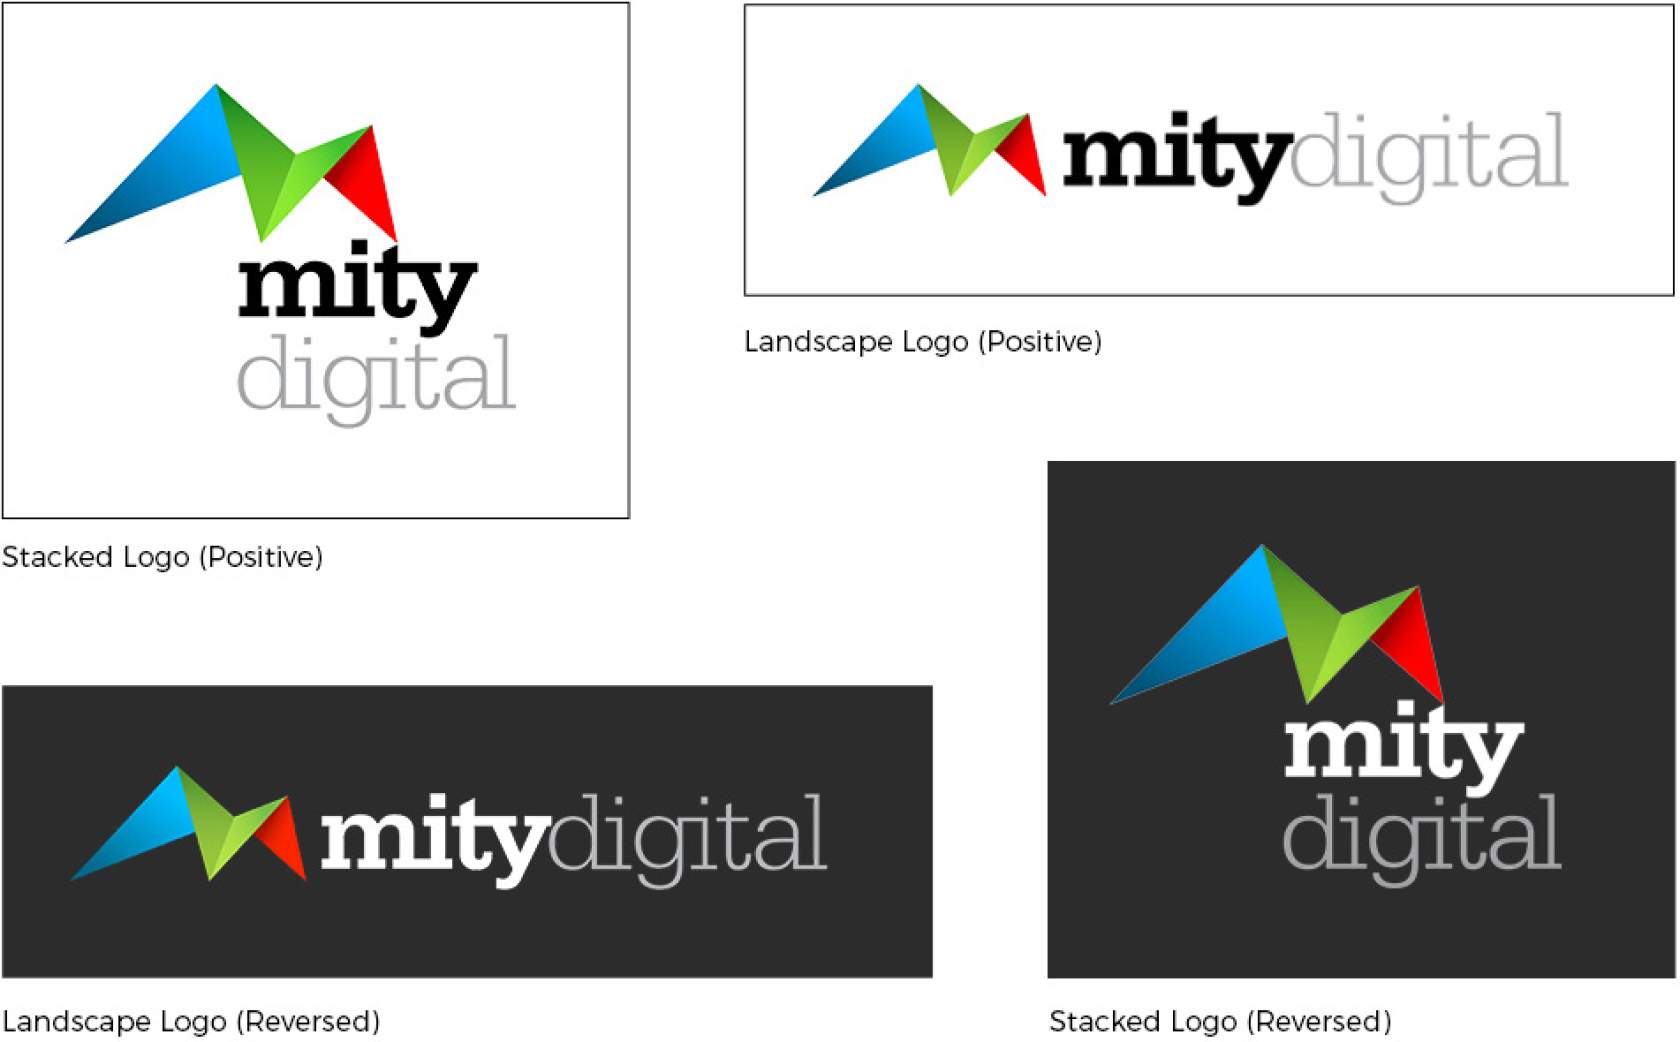 Variations of the Mity Digital logo